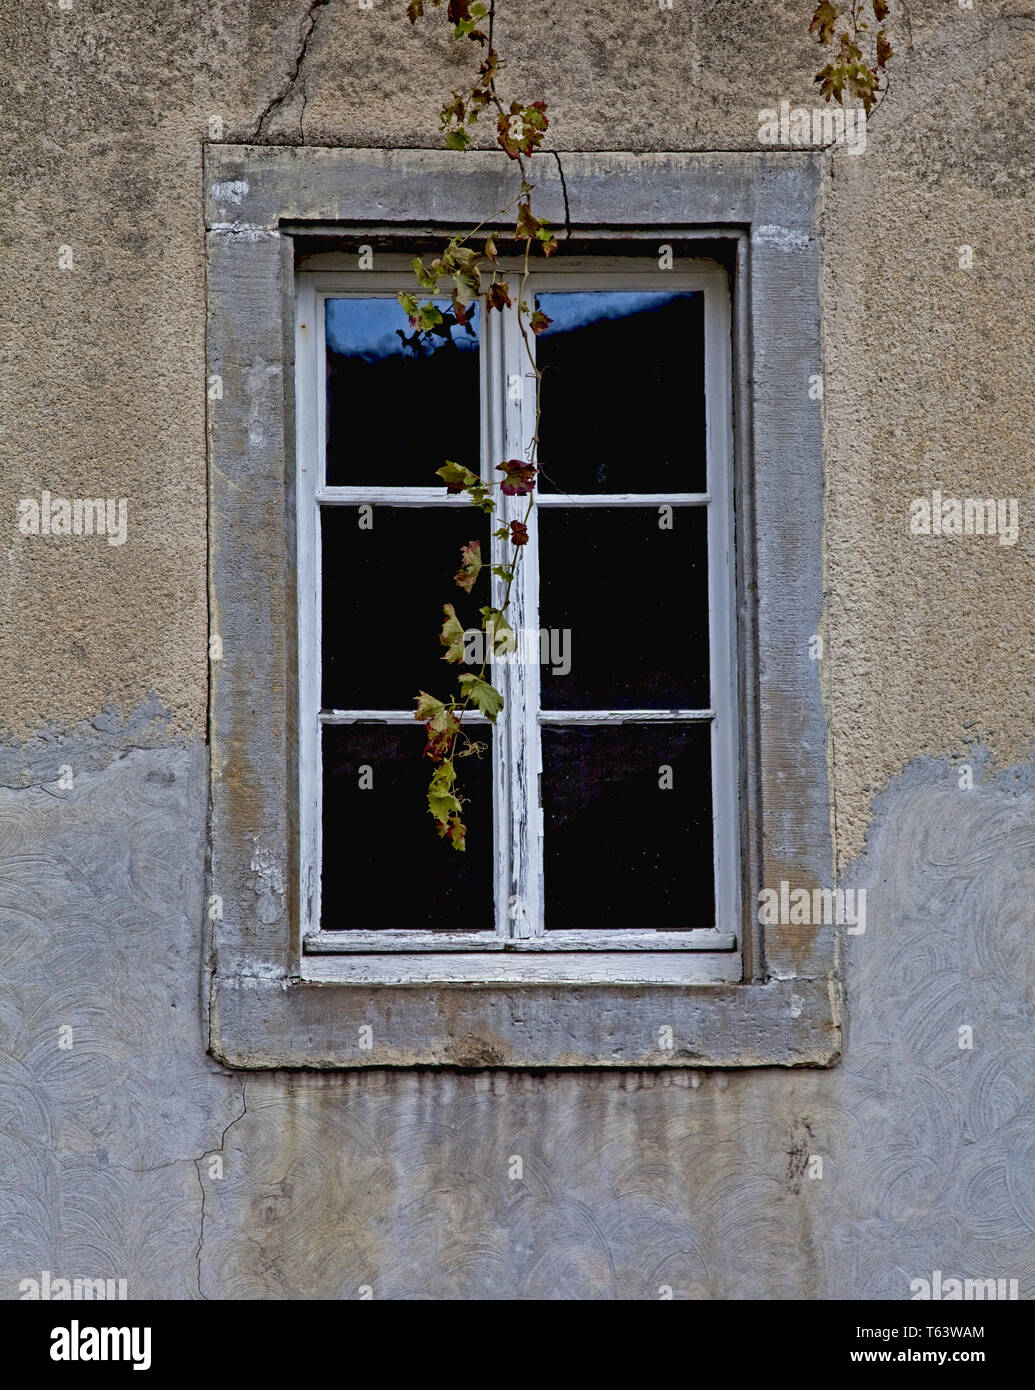 Window with vine tendril Stock Photo